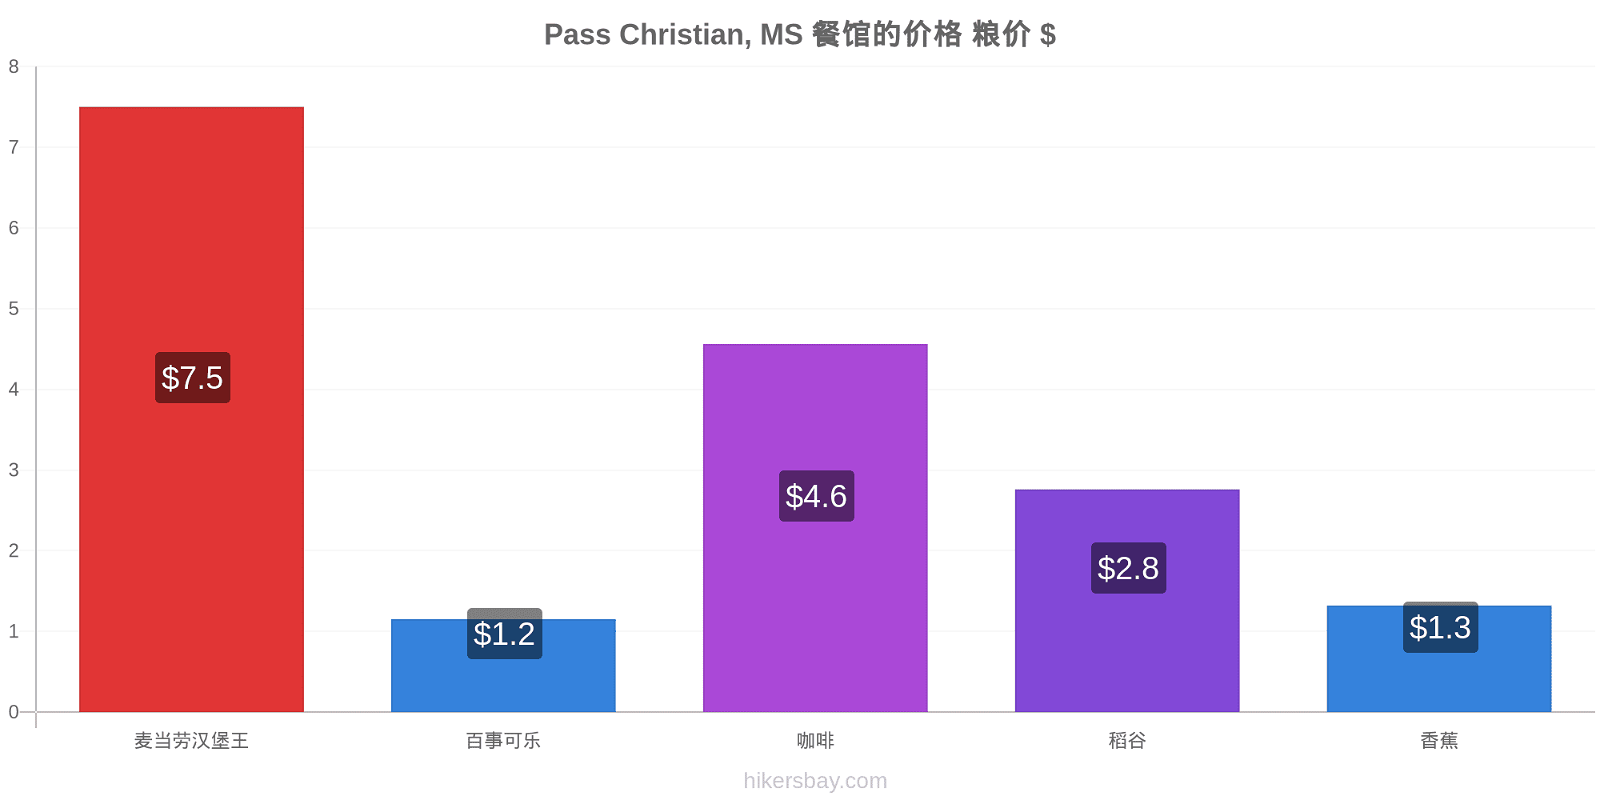 Pass Christian, MS 价格变动 hikersbay.com